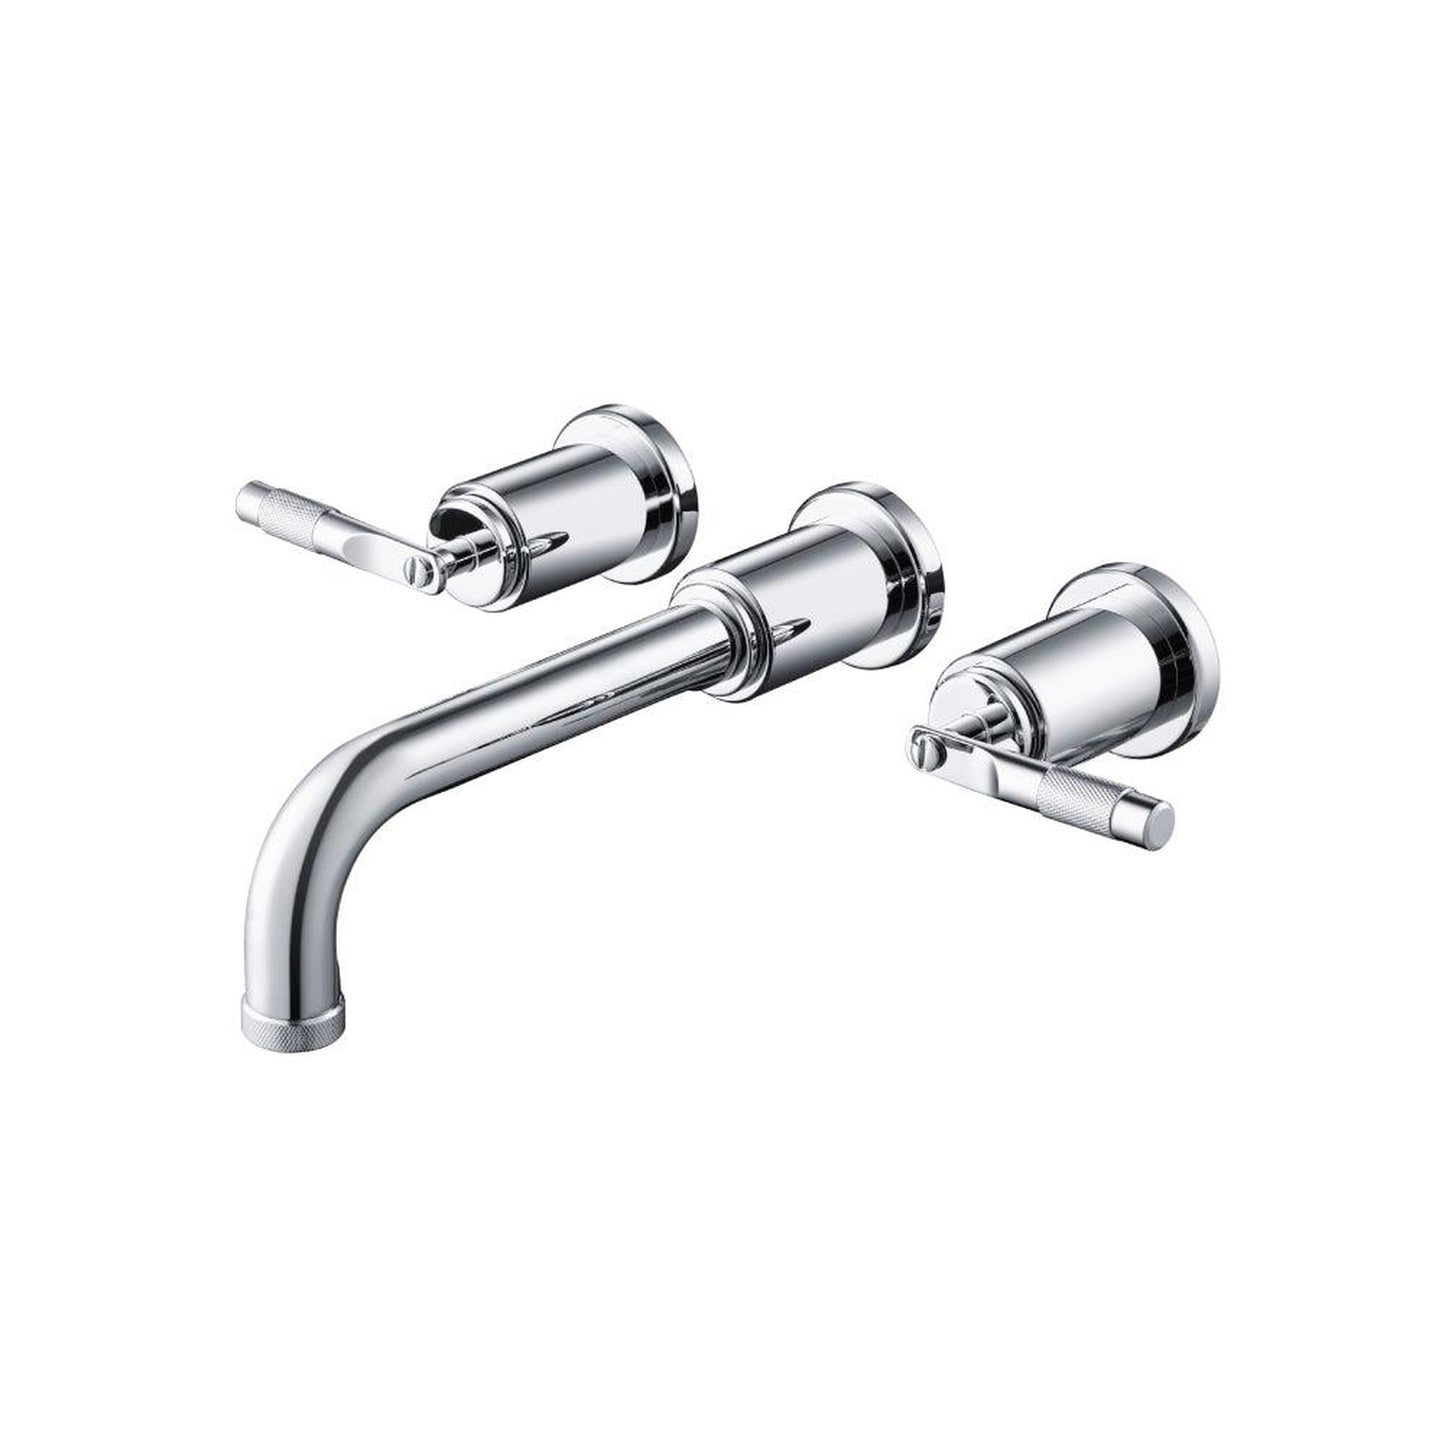 Isenberg Serie 250 8" Three-Hole Chrome Wall-Mounted Bathroom Sink Faucet